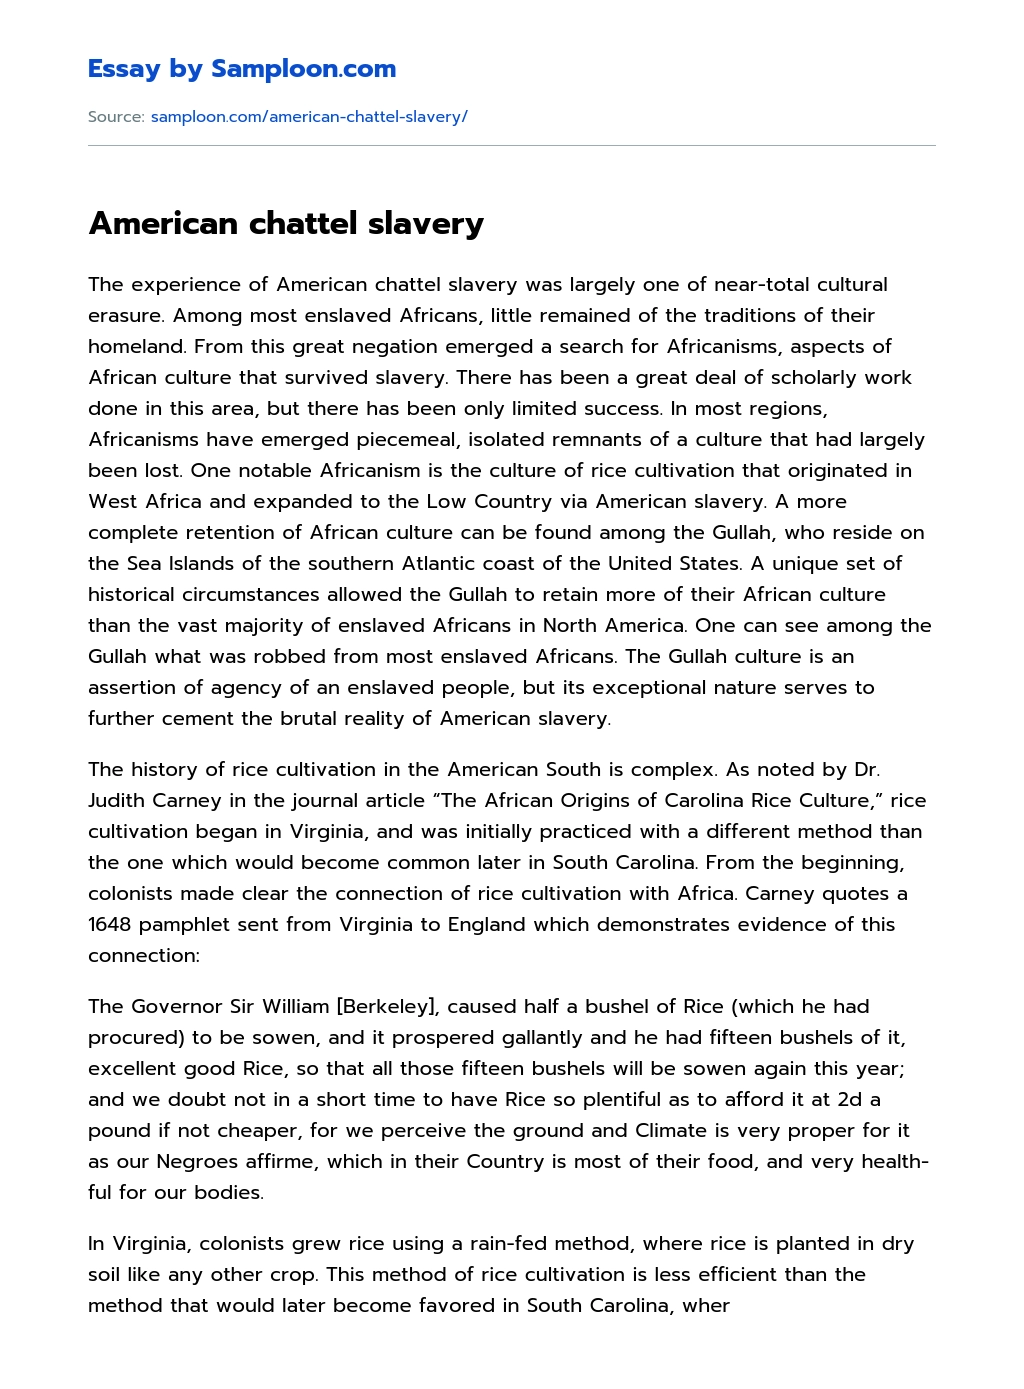 American chattel slavery essay